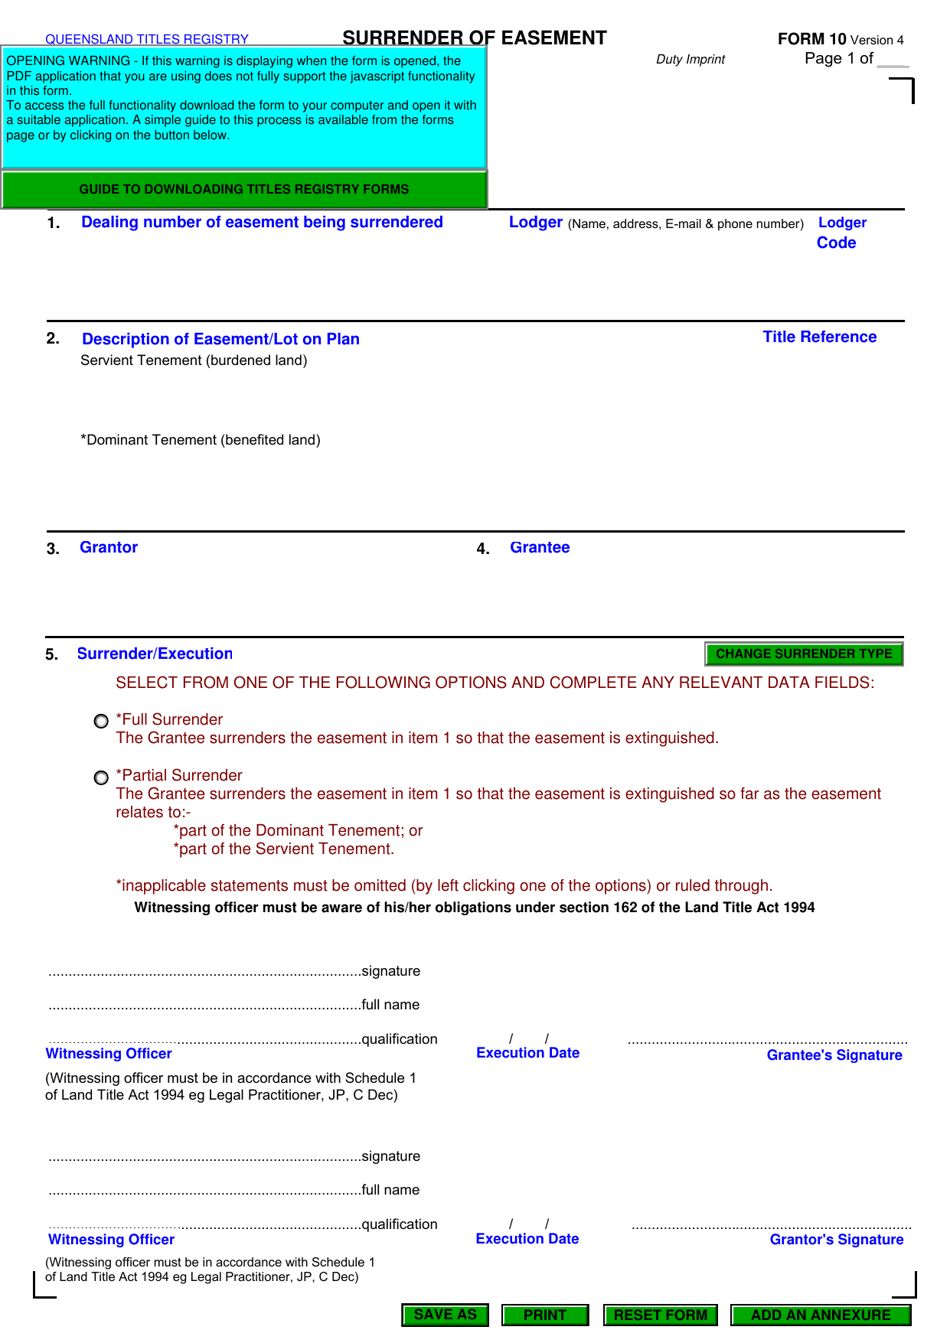 Form 10 Surrender of Easement - Queensland, Australia, Page 1